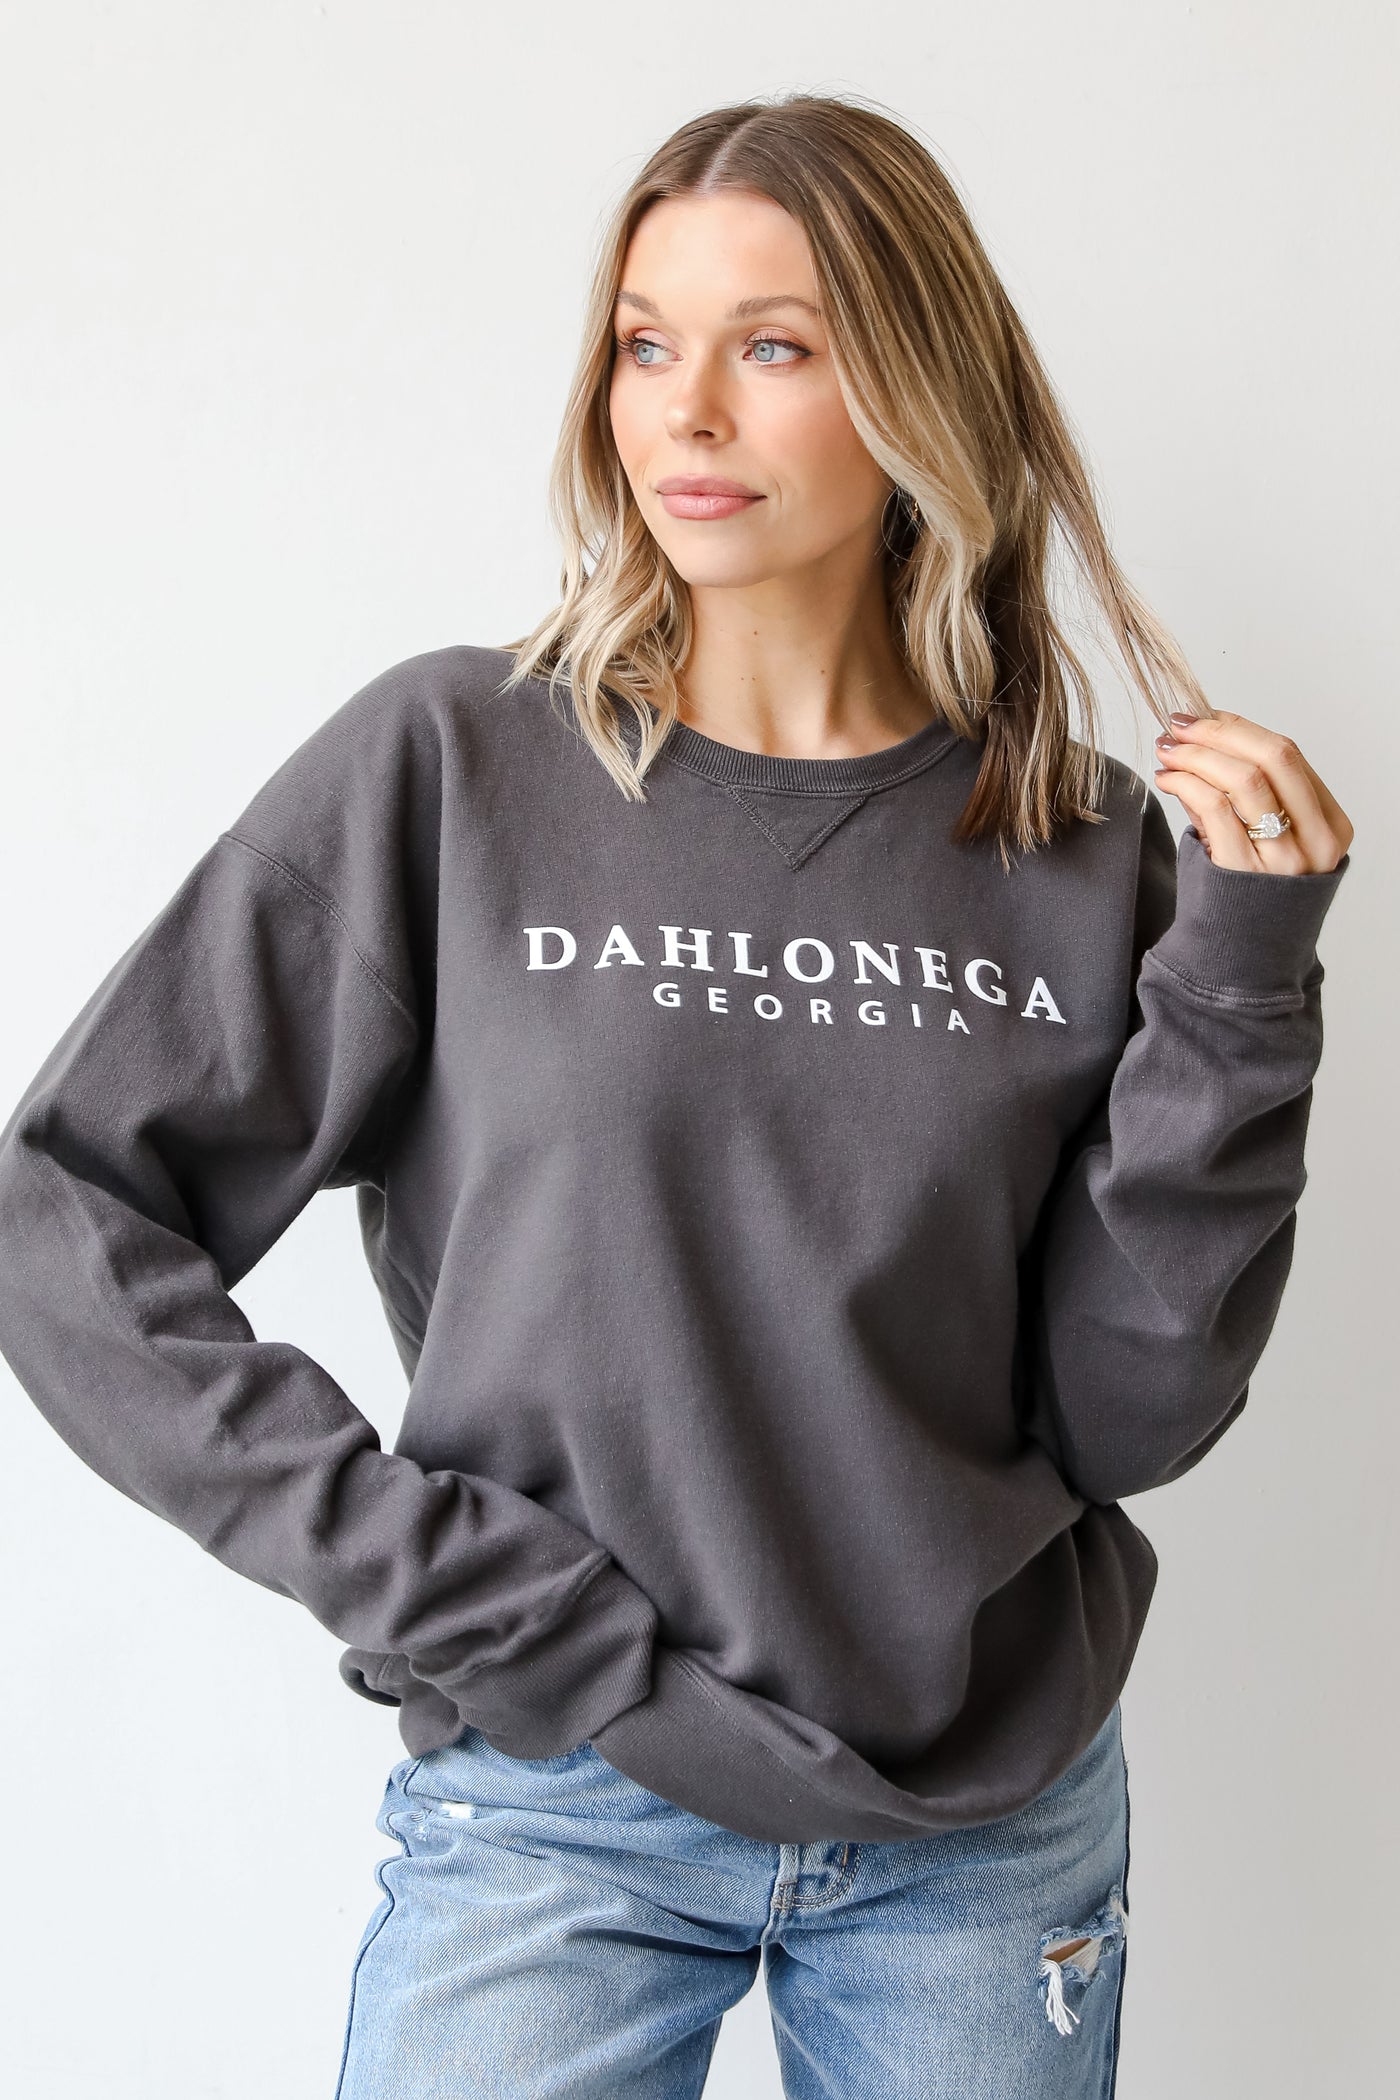 Charcoal Dahlonega Georgia Pullover. Graphic Sweatshirt. Georgia Sweatshirt. Oversized Graphic. 